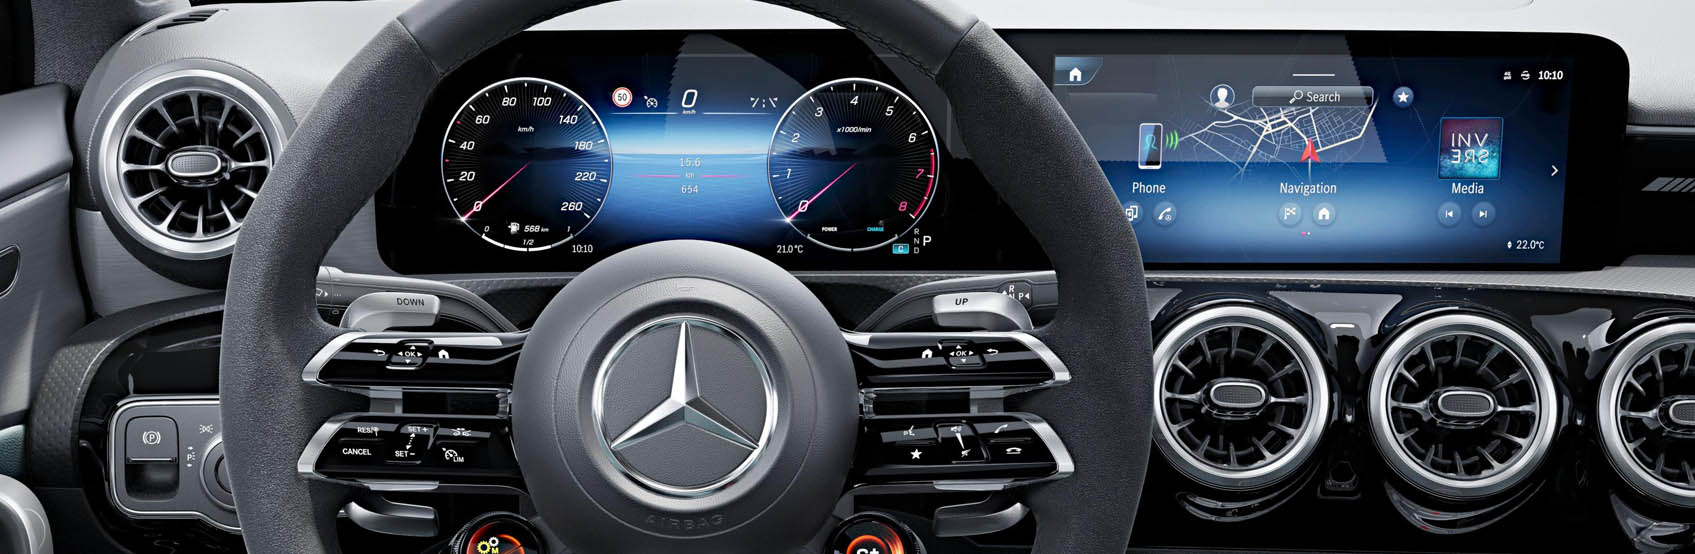 <p>Mercedes-Benz Clase A SEDAN AMG</p>